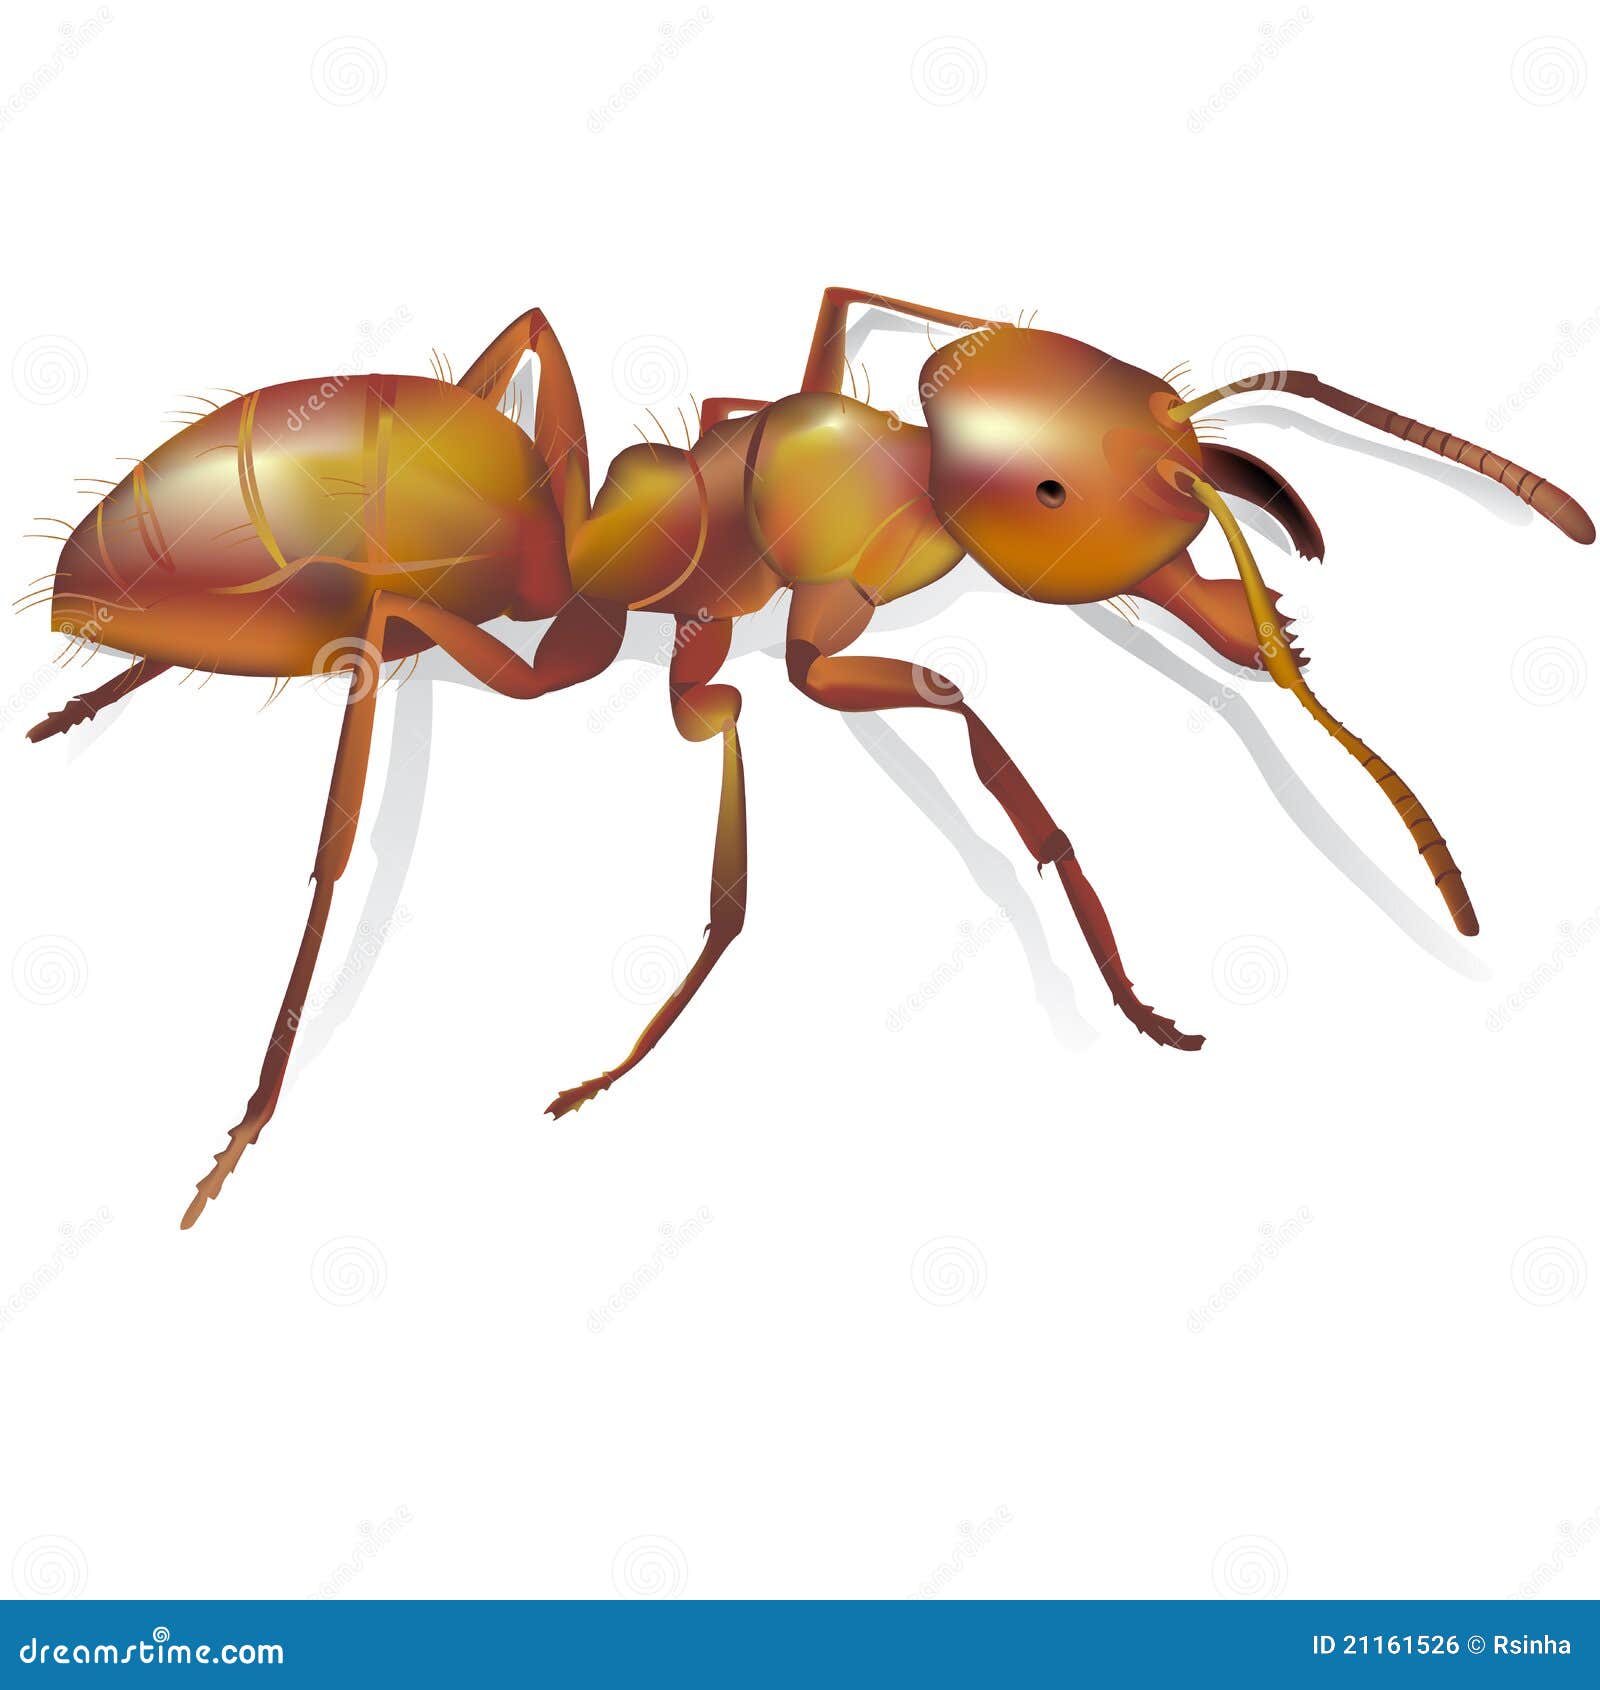 In greater details. Муравей из дерева. Эффекта муравея. Голова муравья вблизи. Покажи лицо муравея.